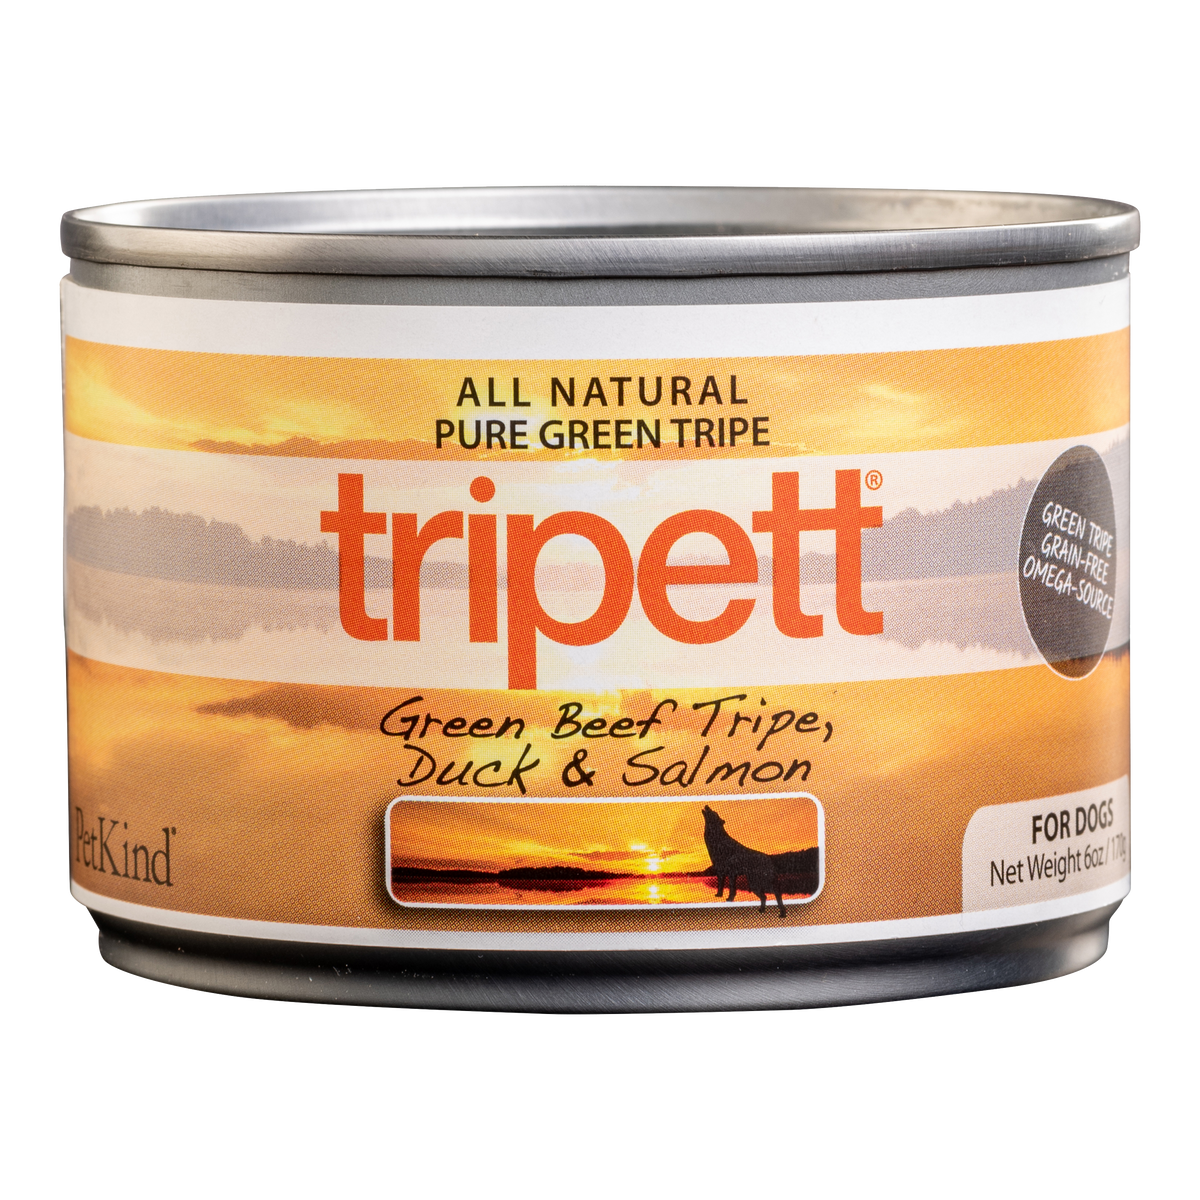 Tripett Green Beef Tripe, Duck and Salmon (6 oz)